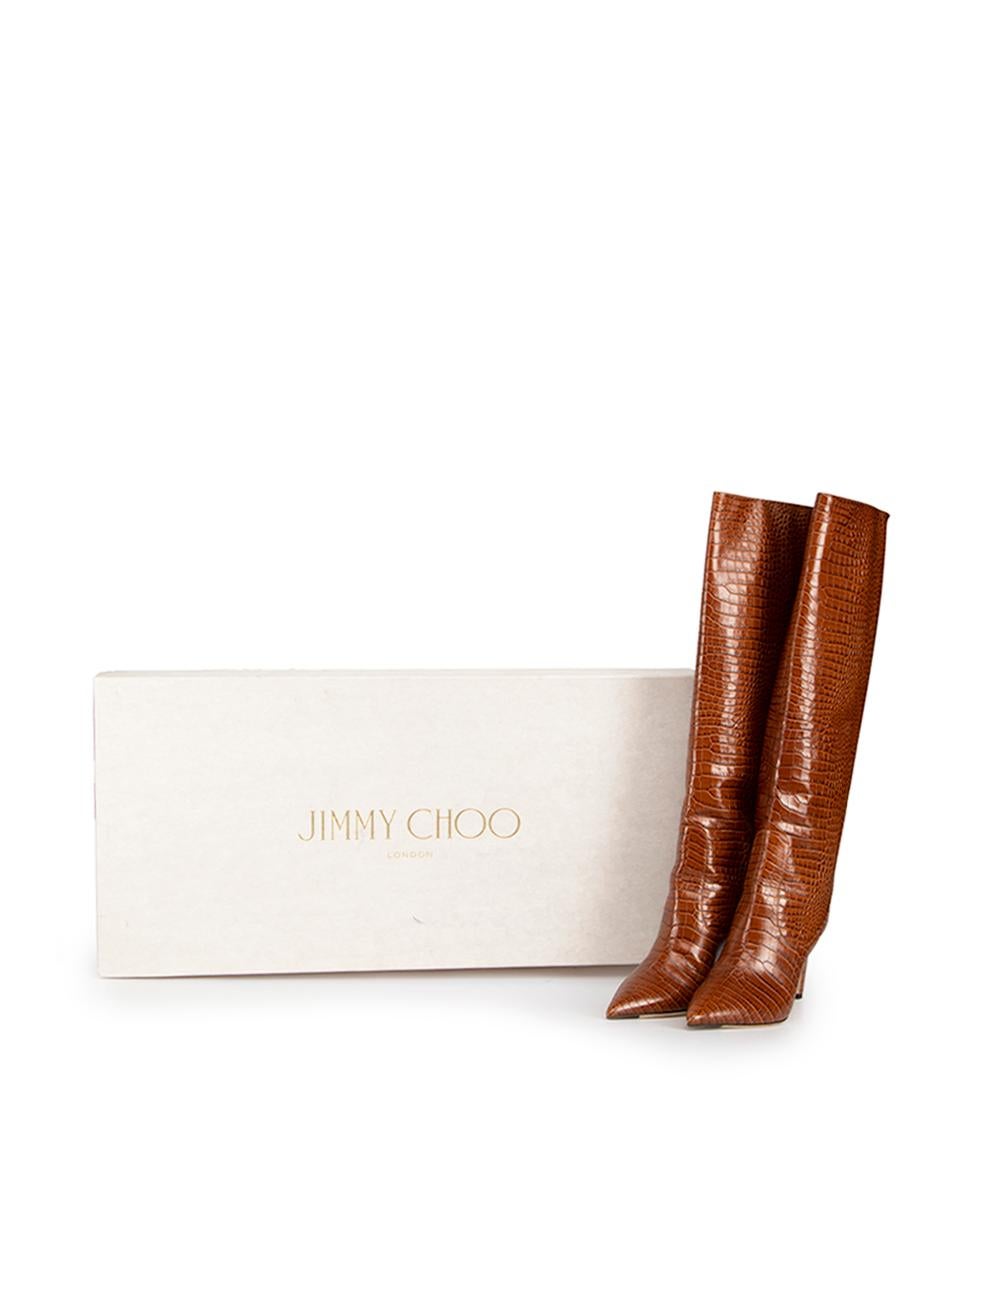 Jimmy Choo Brown Leather Croc Embossed Mavis Knee High Boots Size IT 38 1